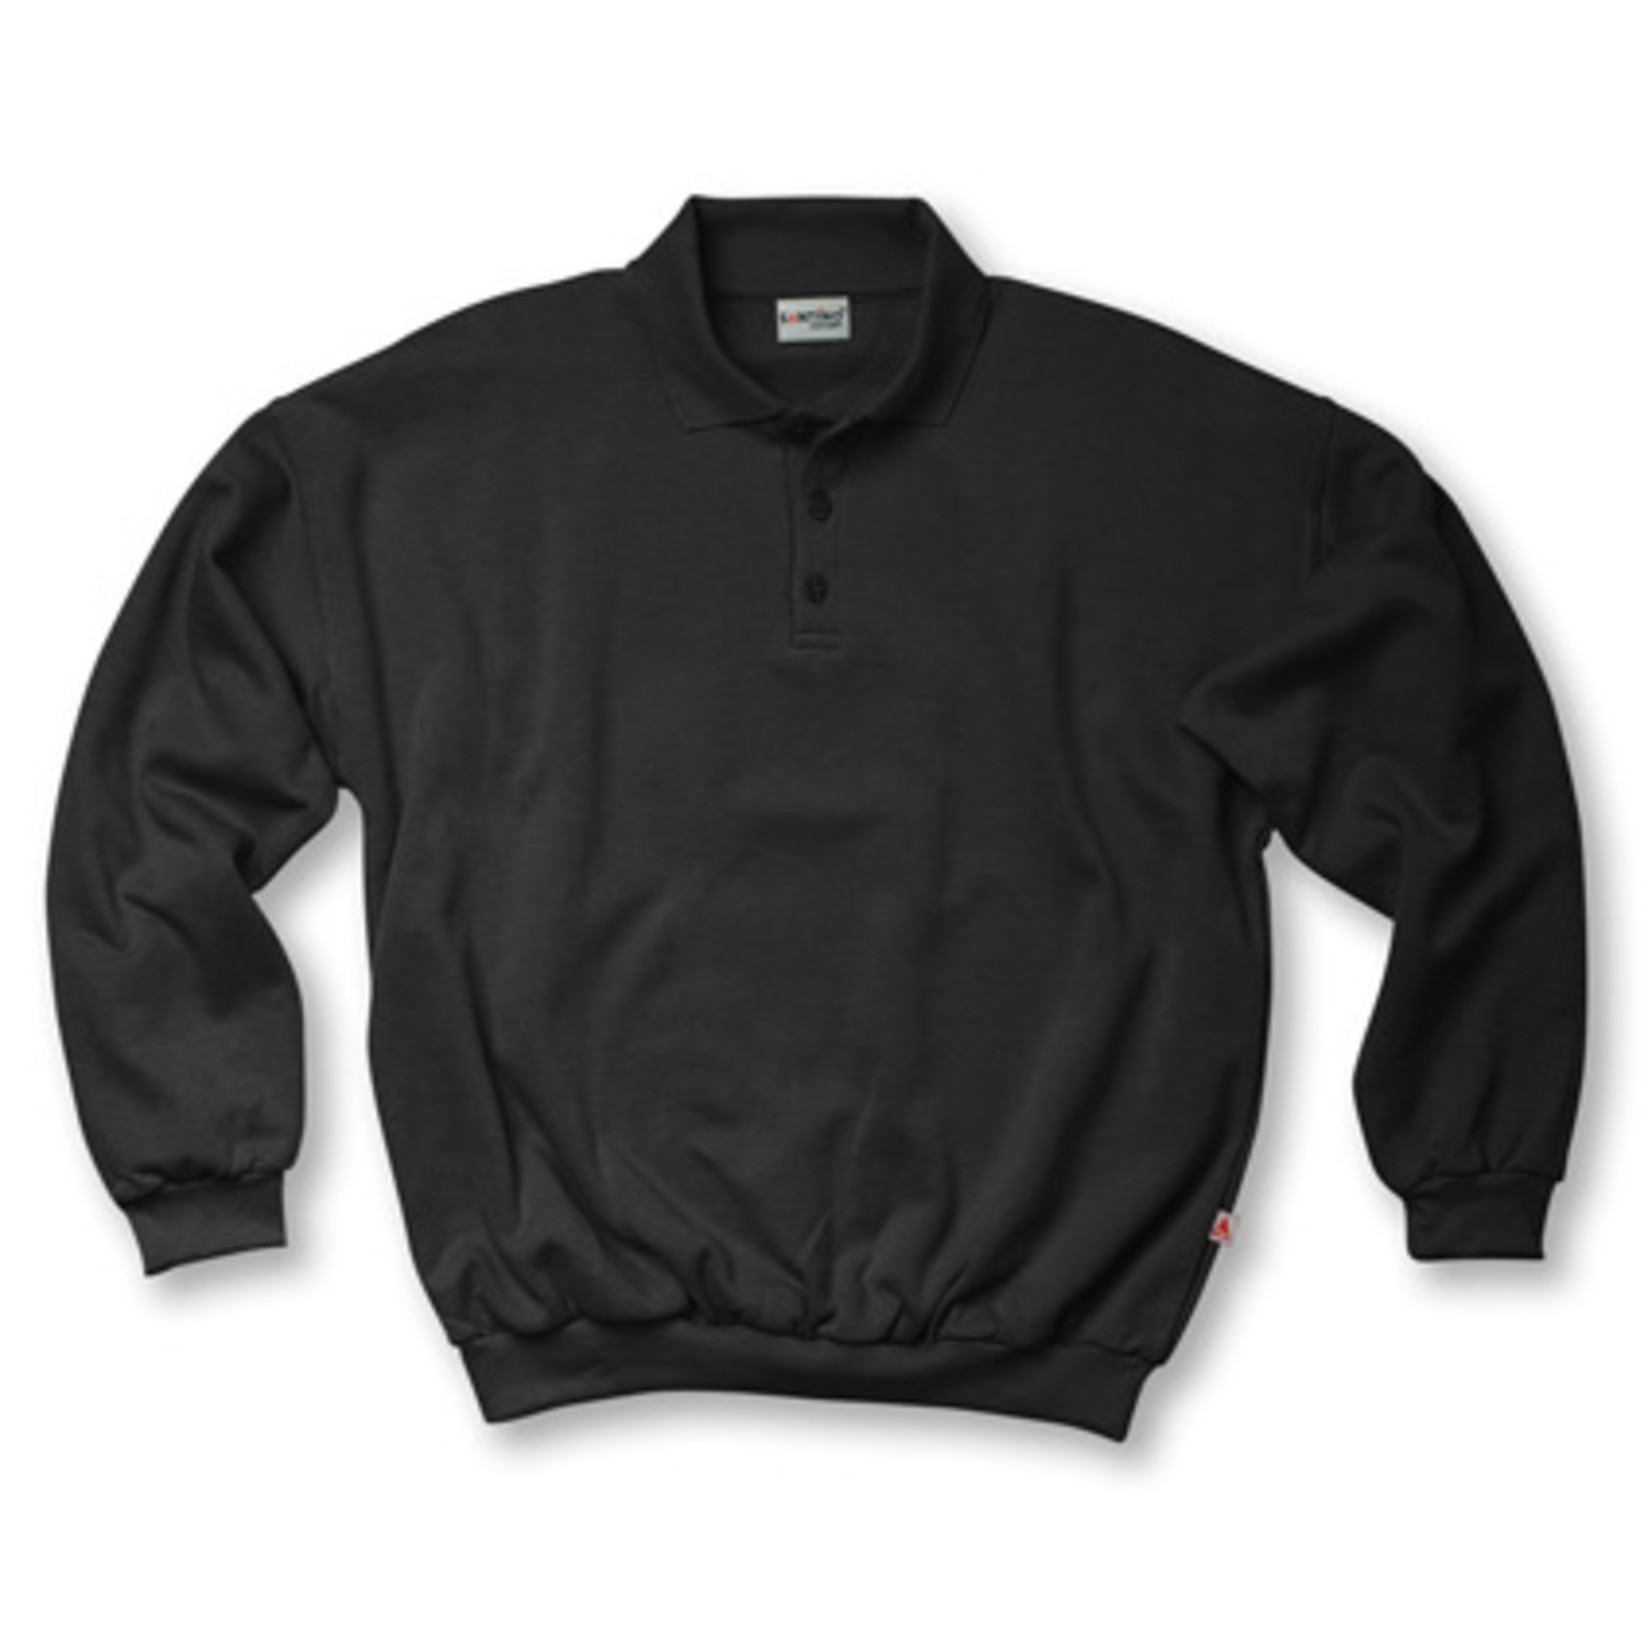 Santino Sweater, polokraag zwart